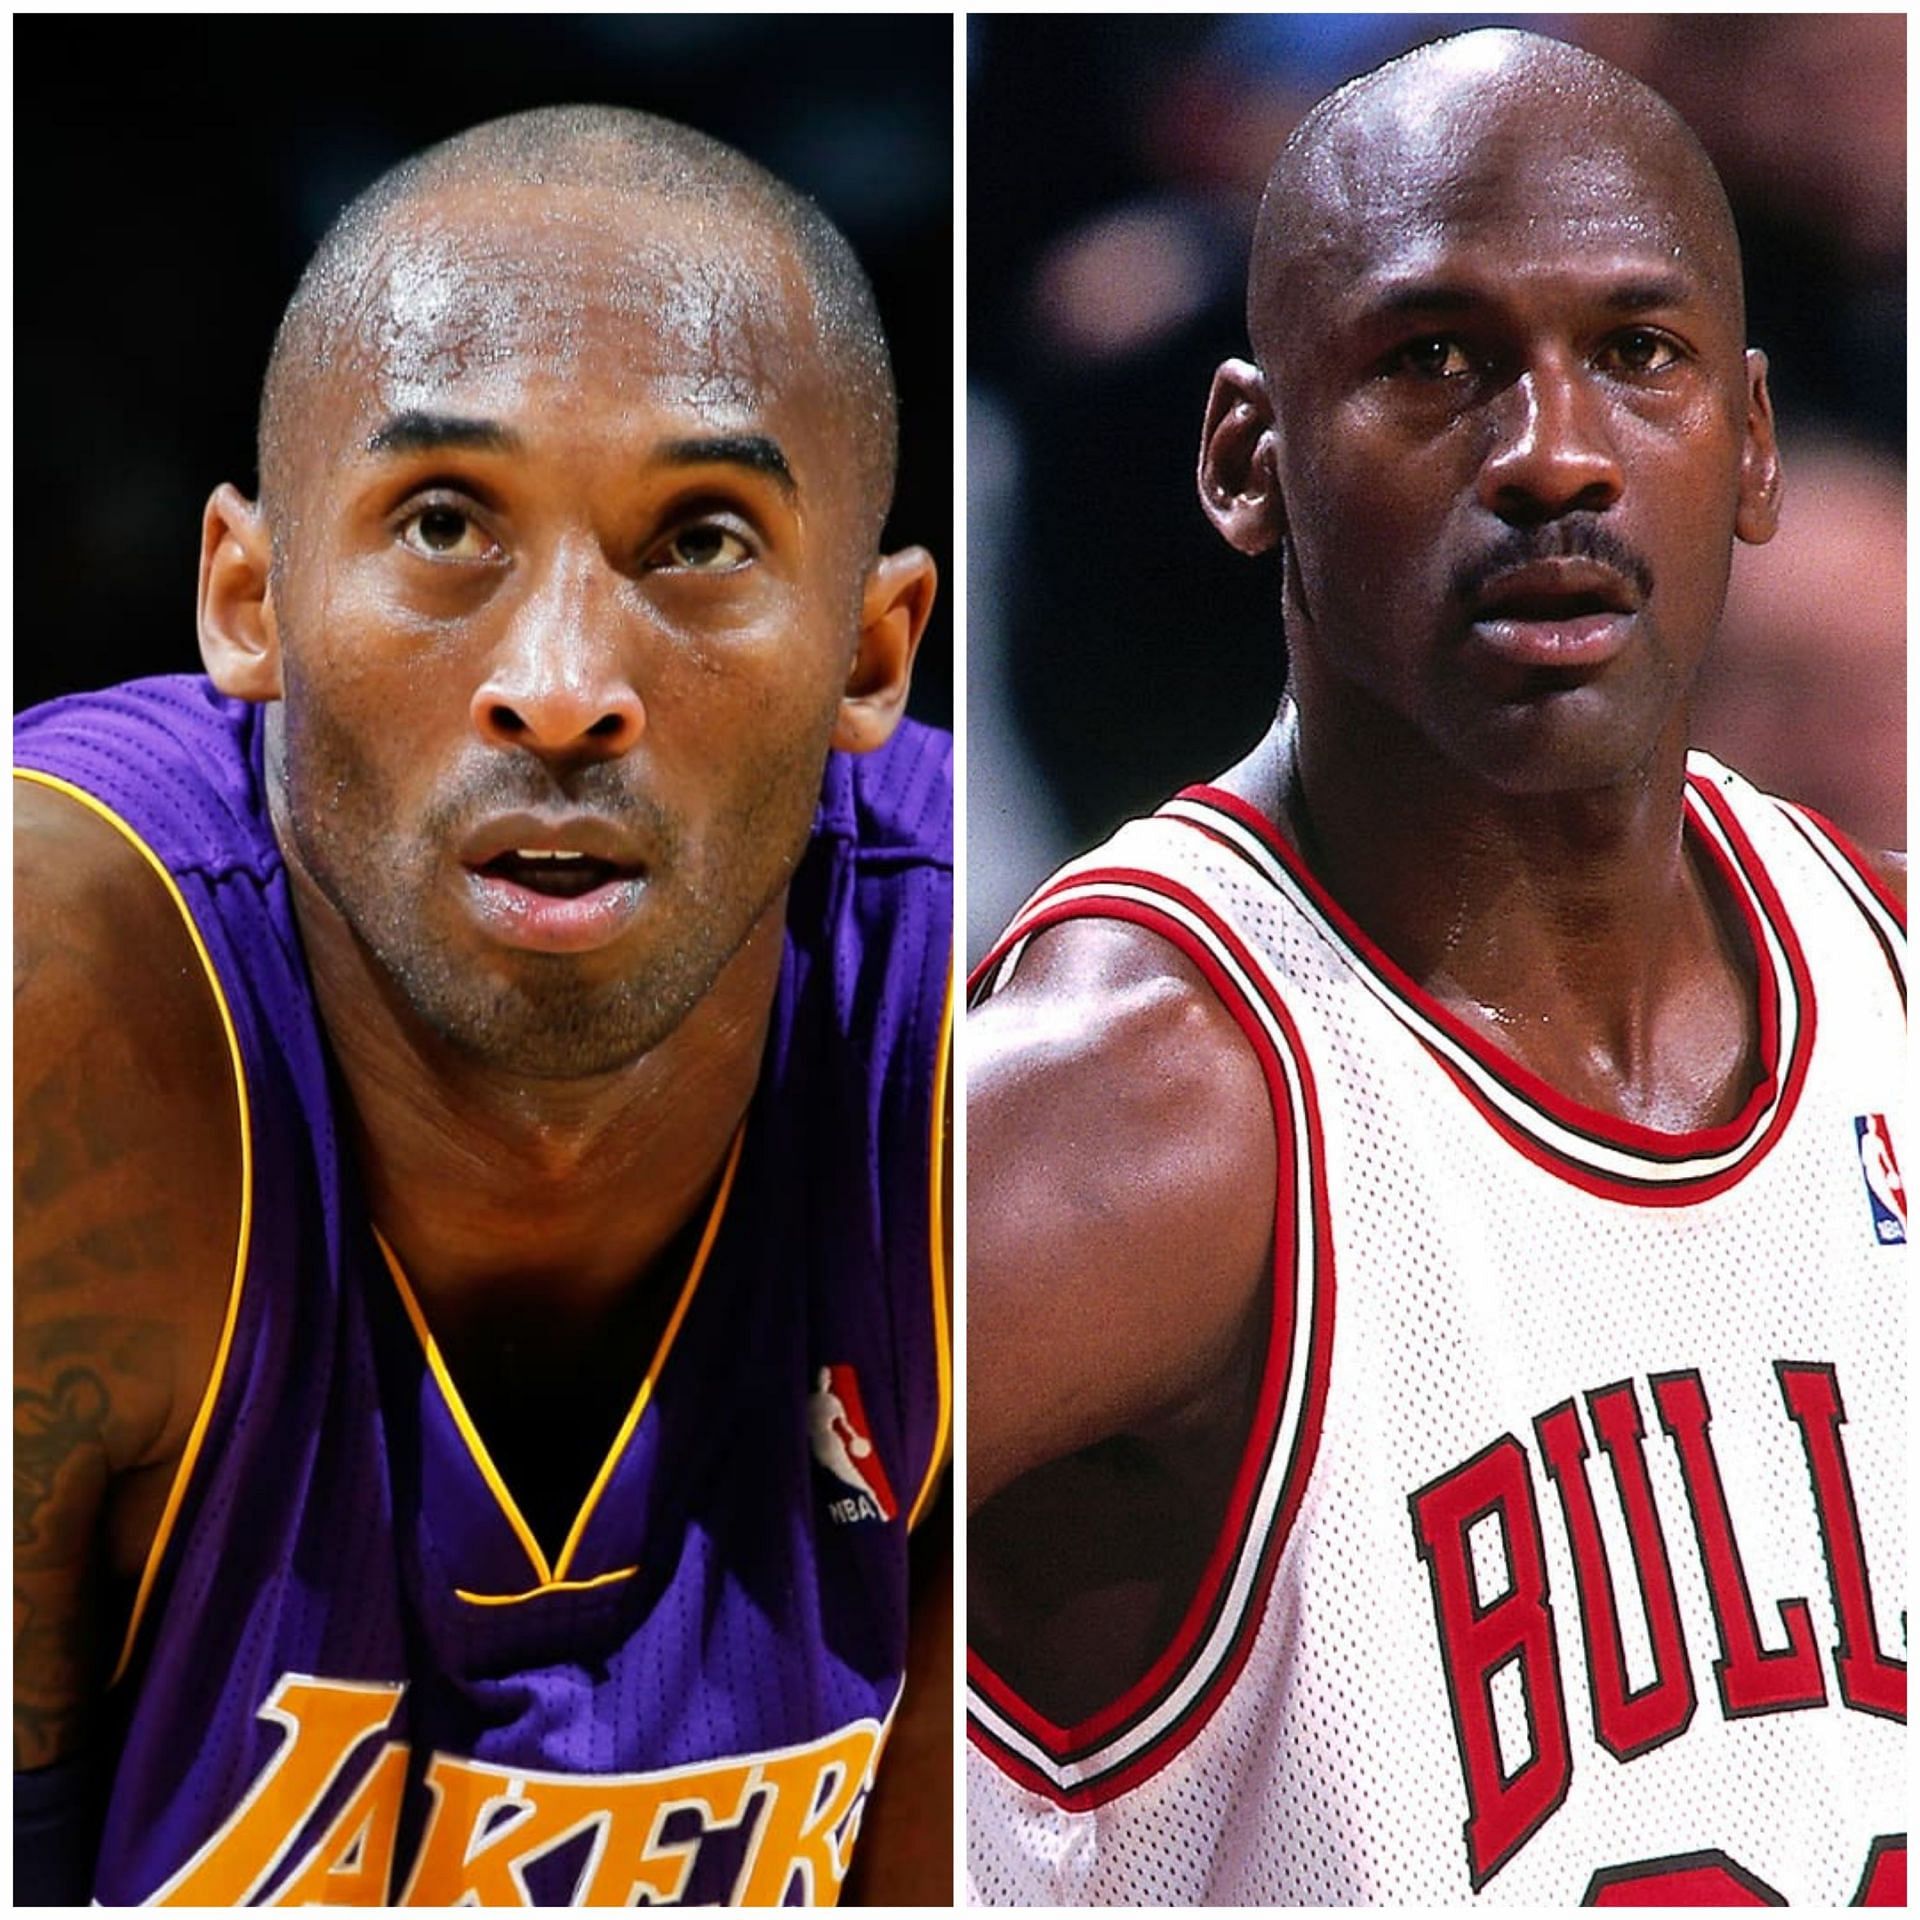 Who shot better between Michael Jordan and Kobe Bryant?